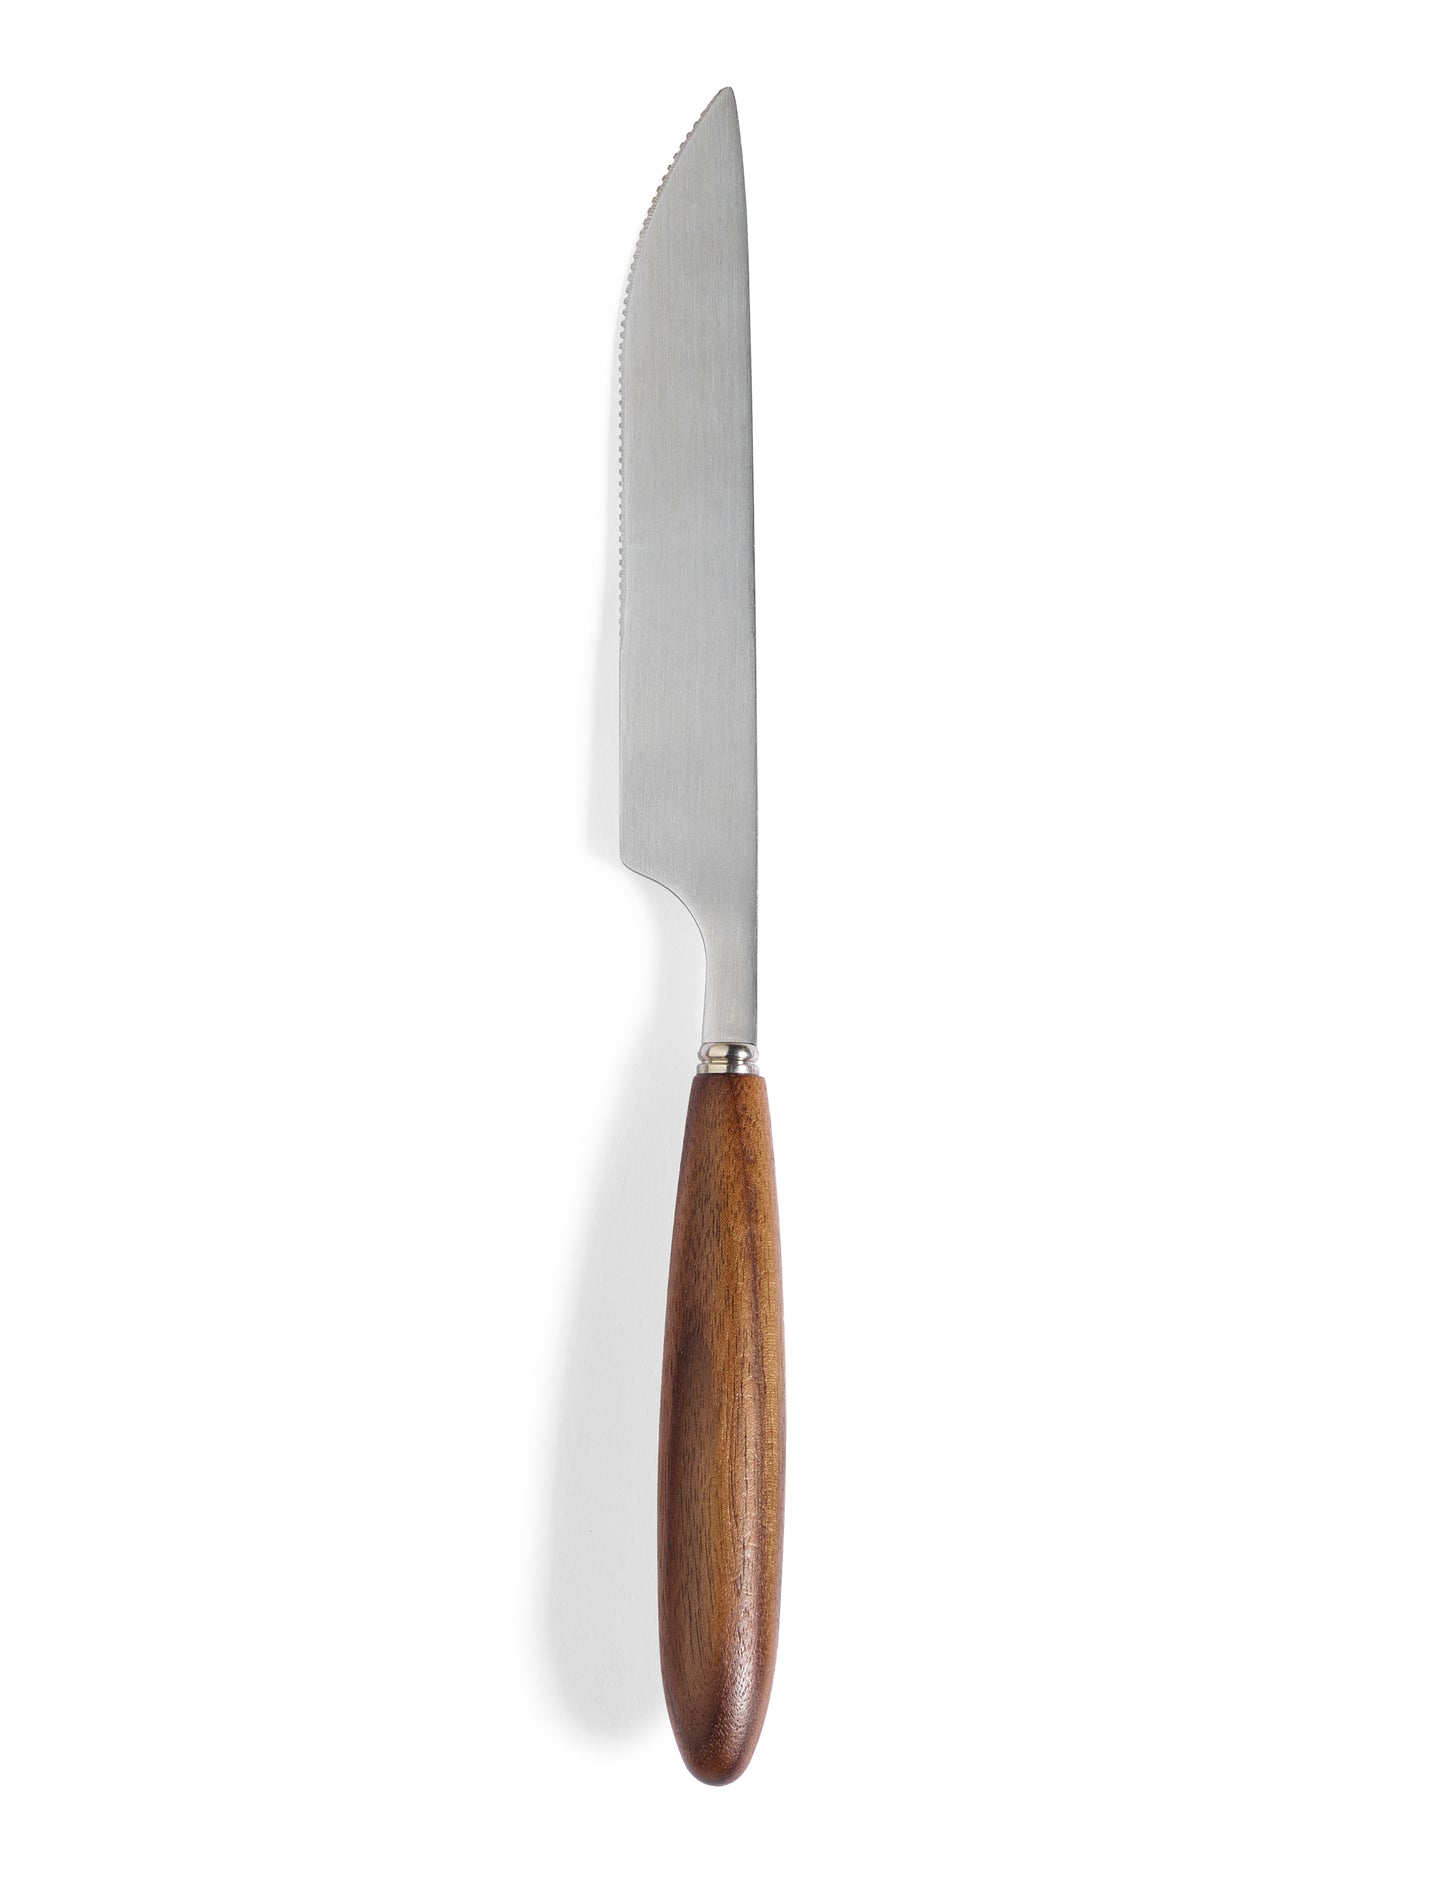 Feast Table Knives (6 pk)